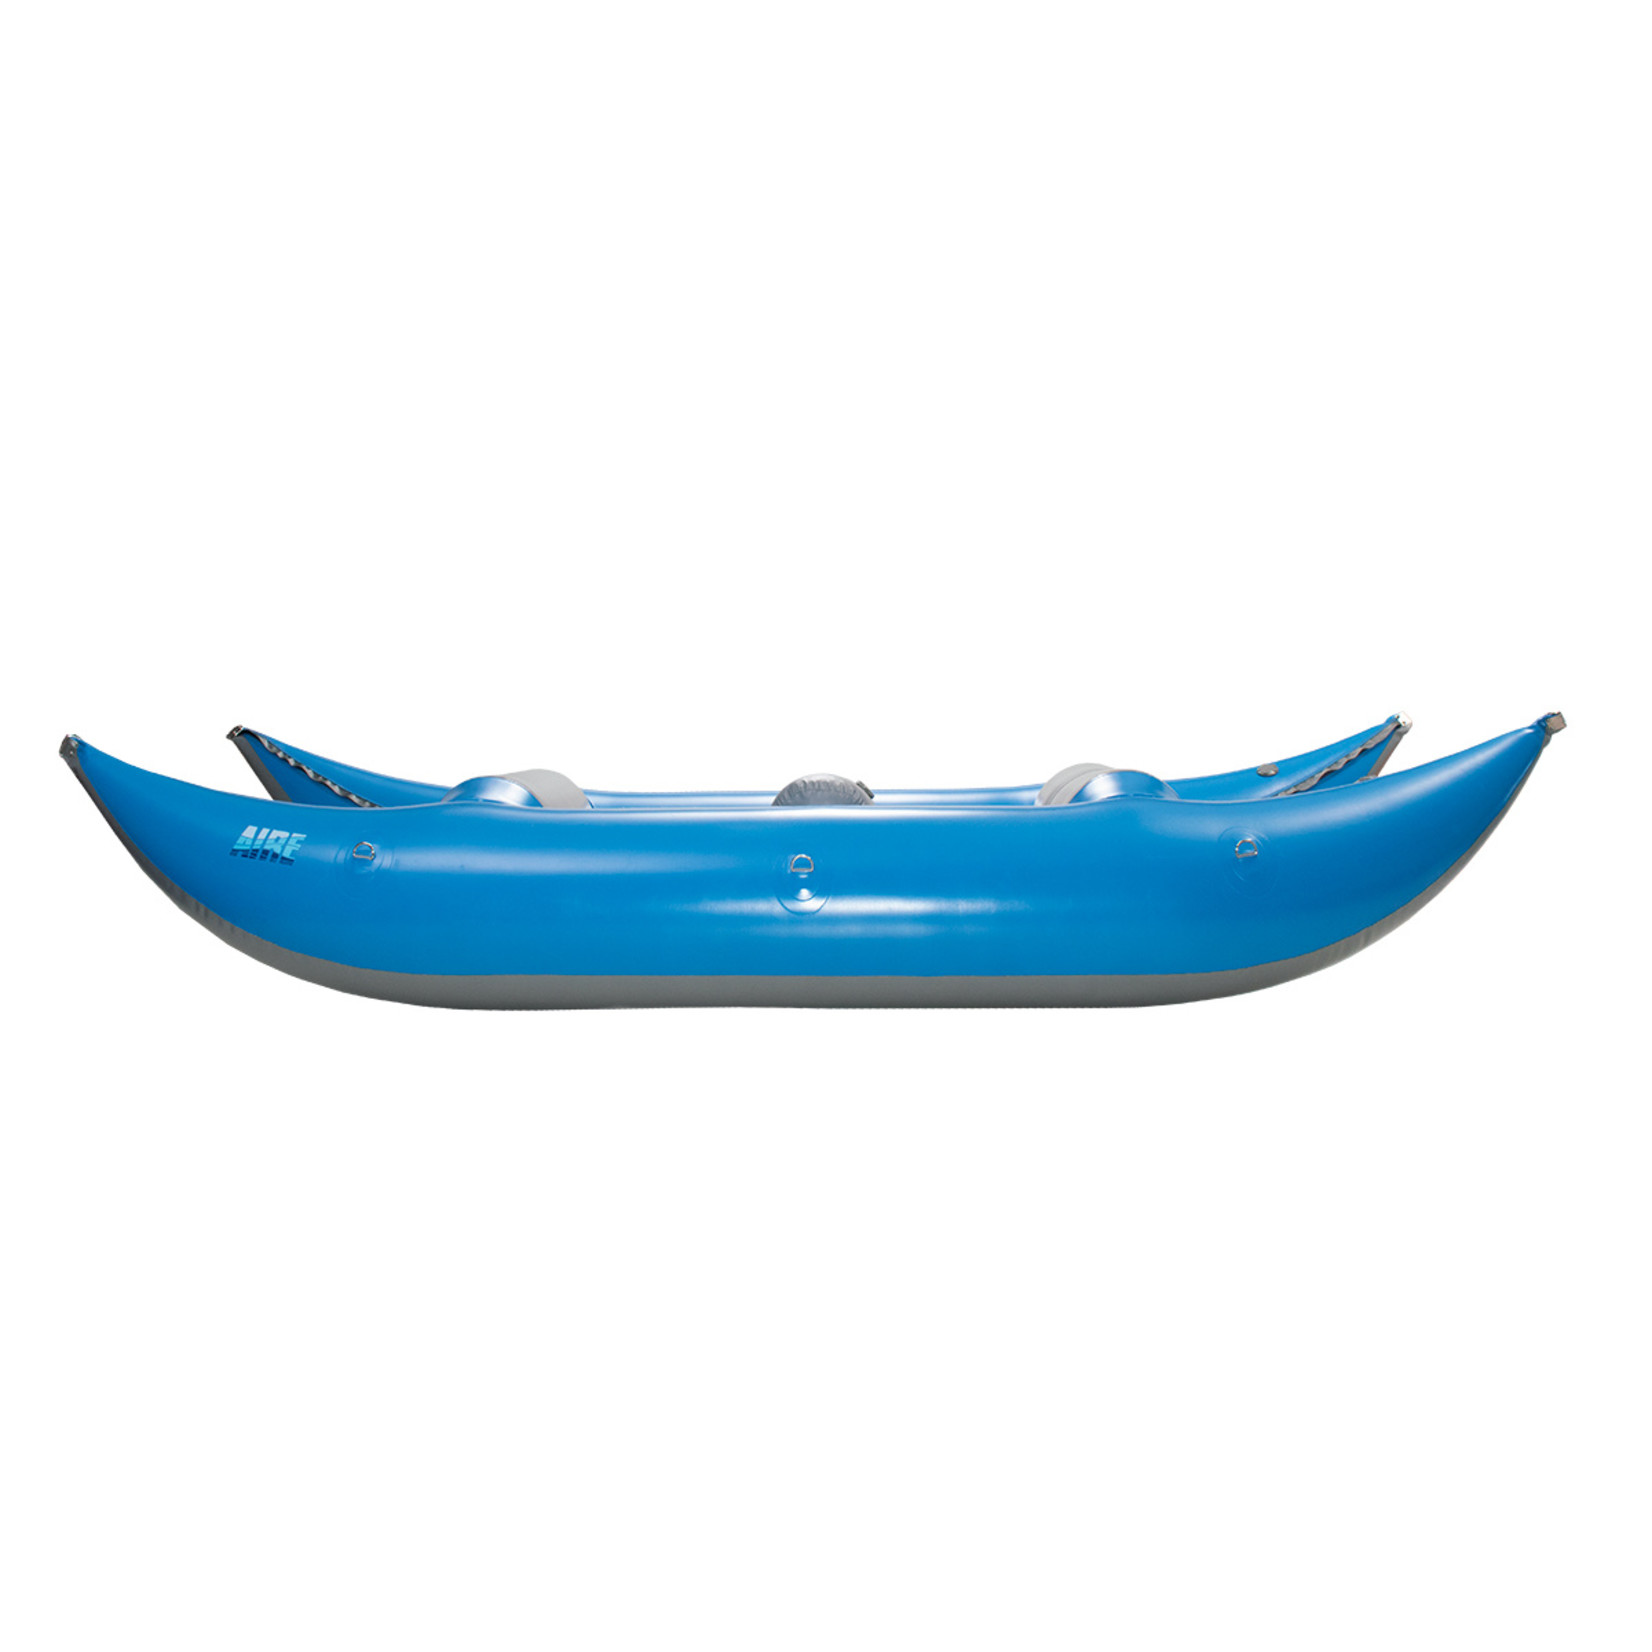 UWG Rental Paddle Boat AIRE Sabertooth Frameless Cataraft